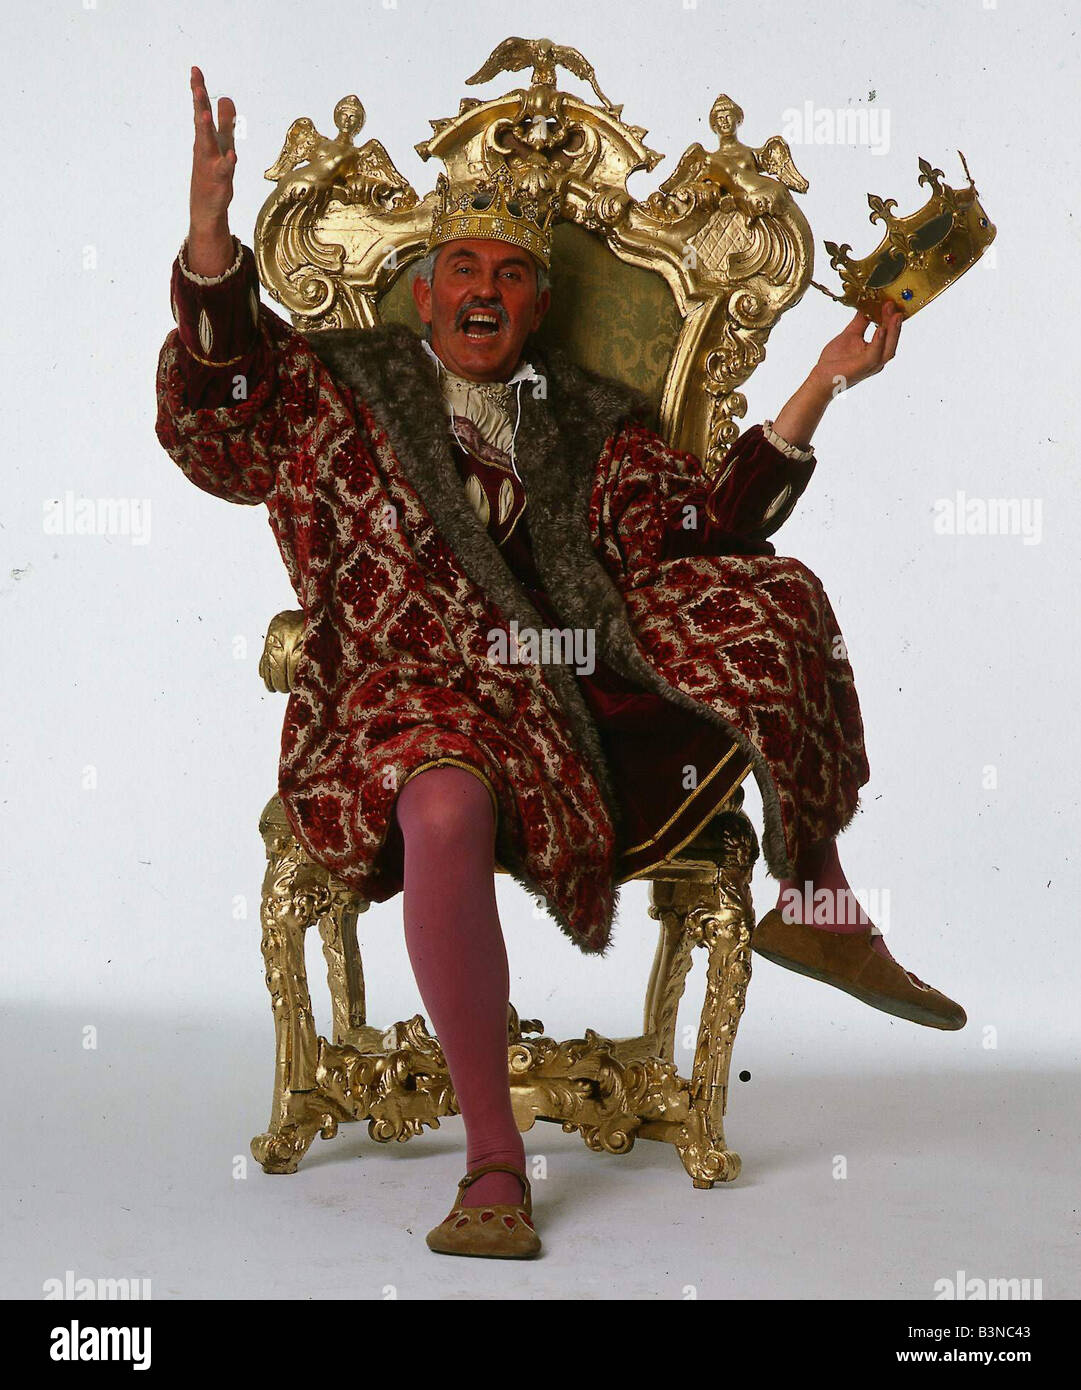 King Sitting On Throne